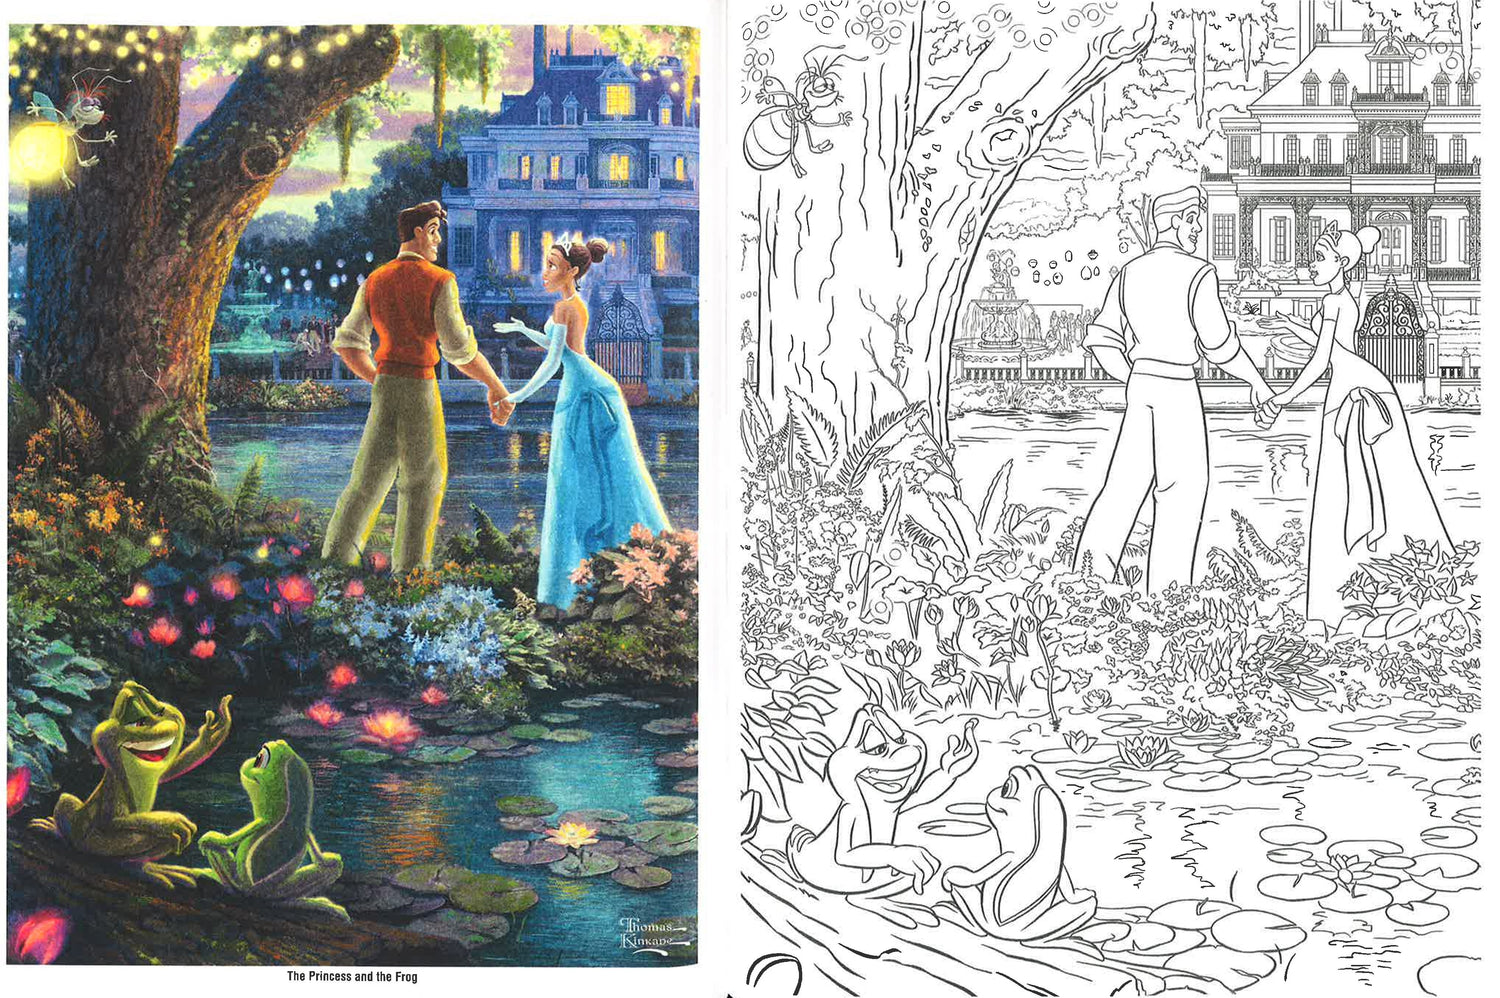 Disney Dreams Collection Thomas Kinkade Studios Coloring Book by Thomas  Kinkade, 9781449483180